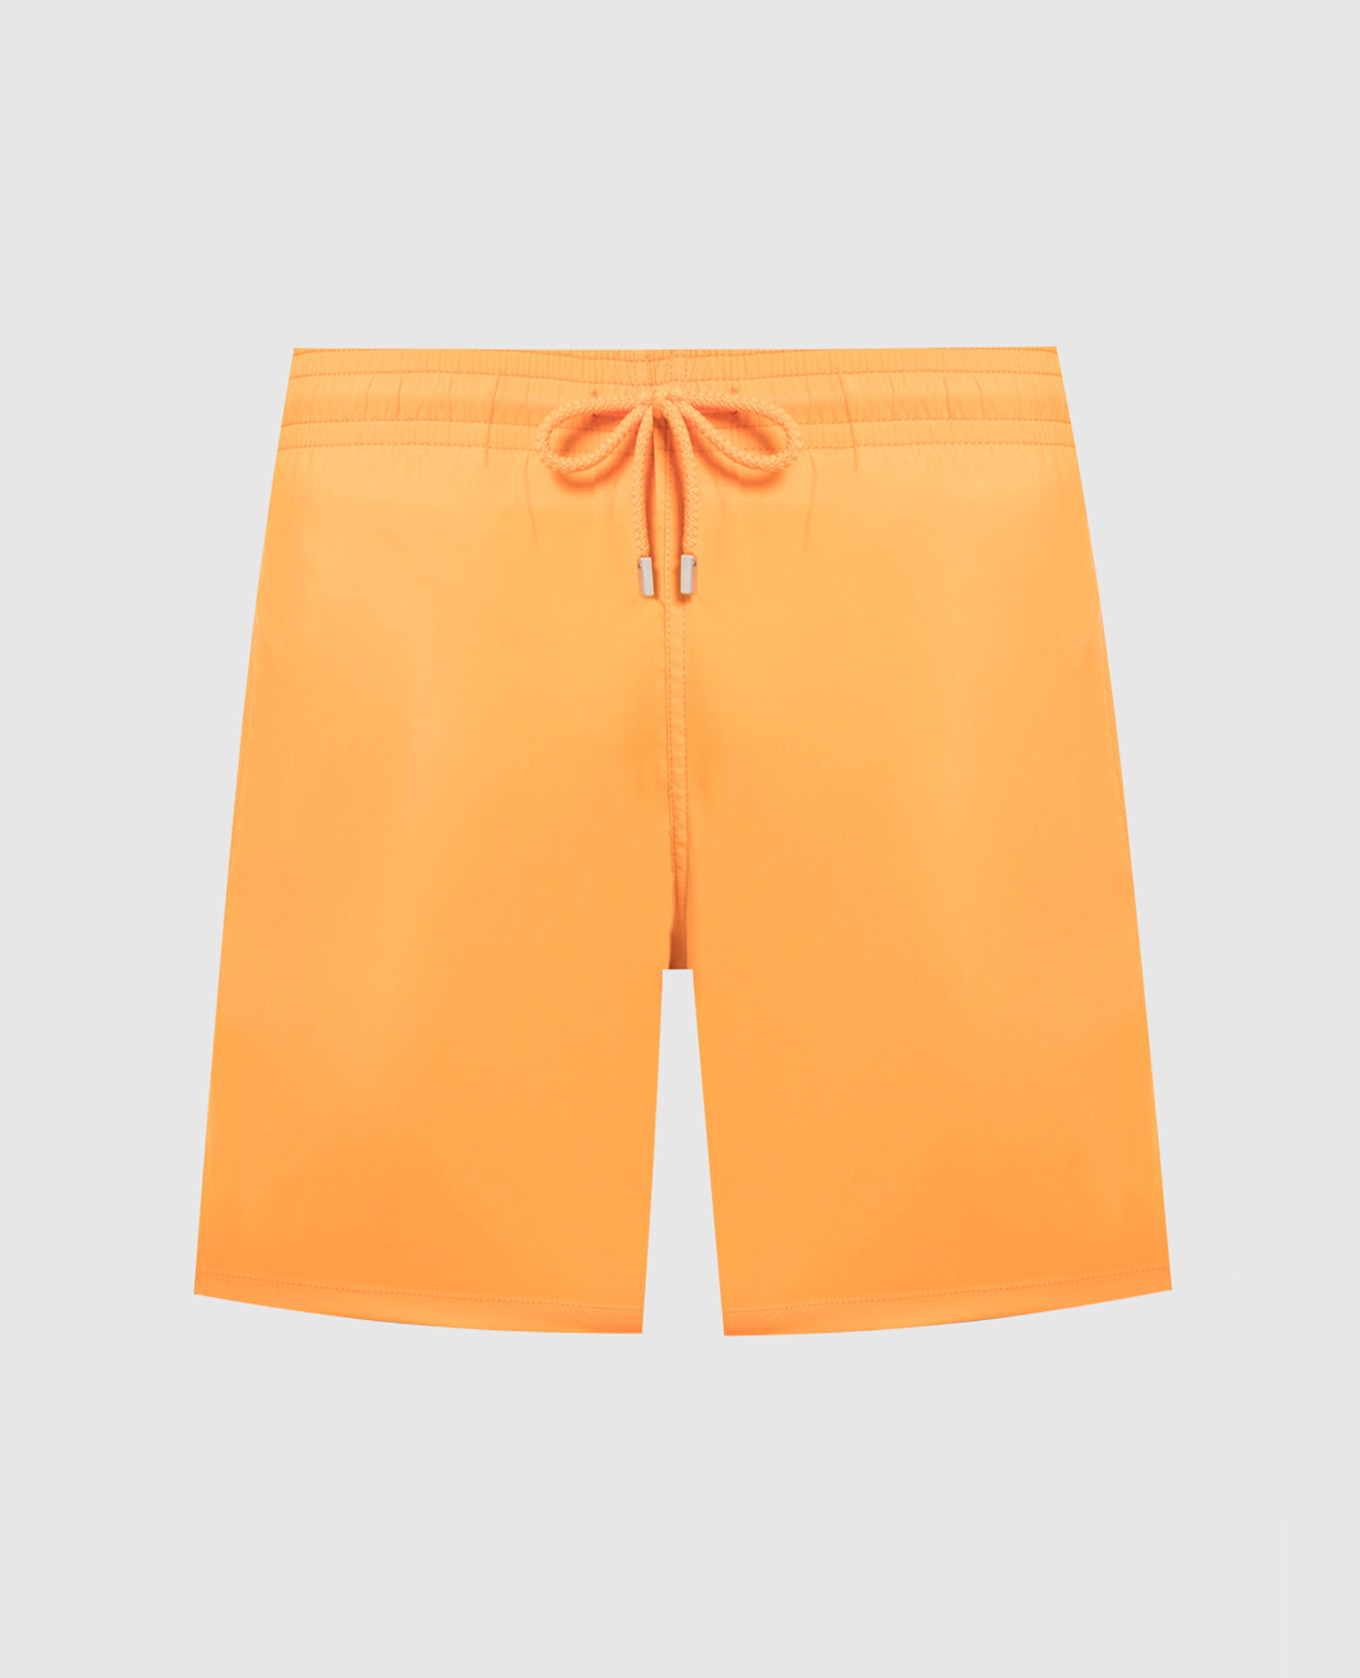 Moorea Orange Swim Shorts